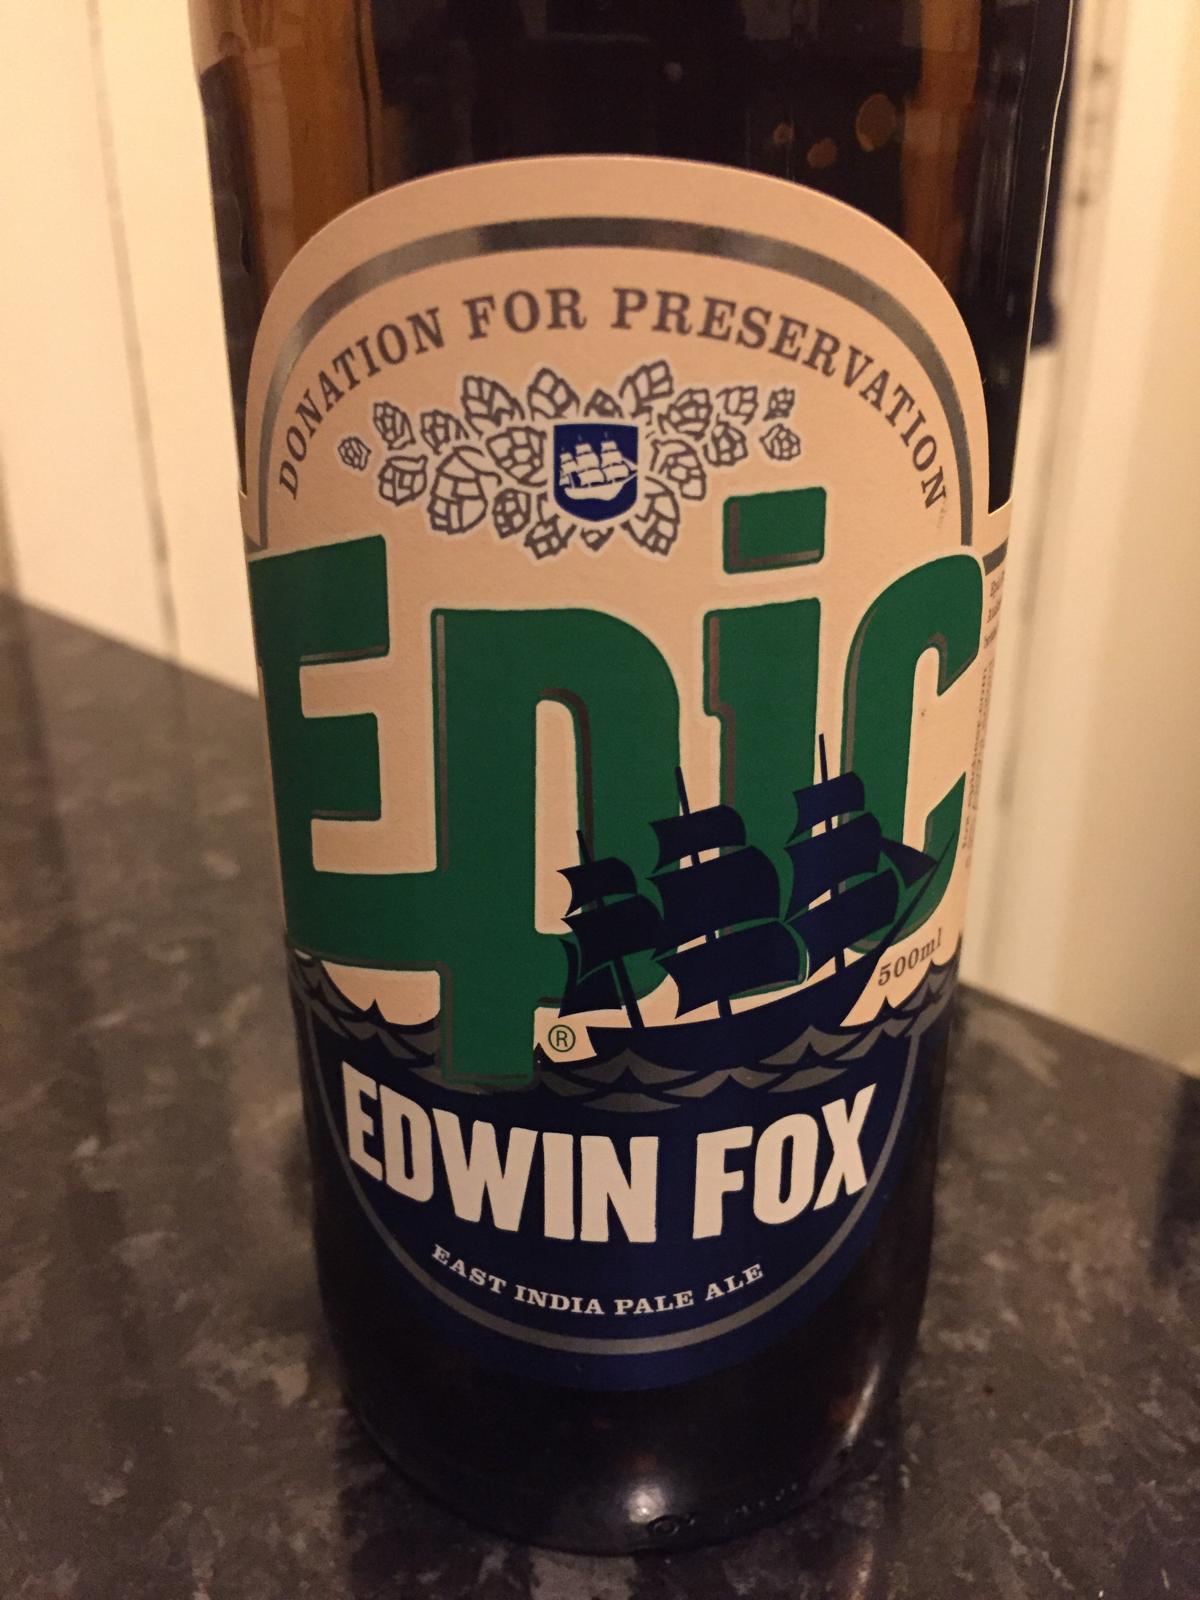 Edwin Fox